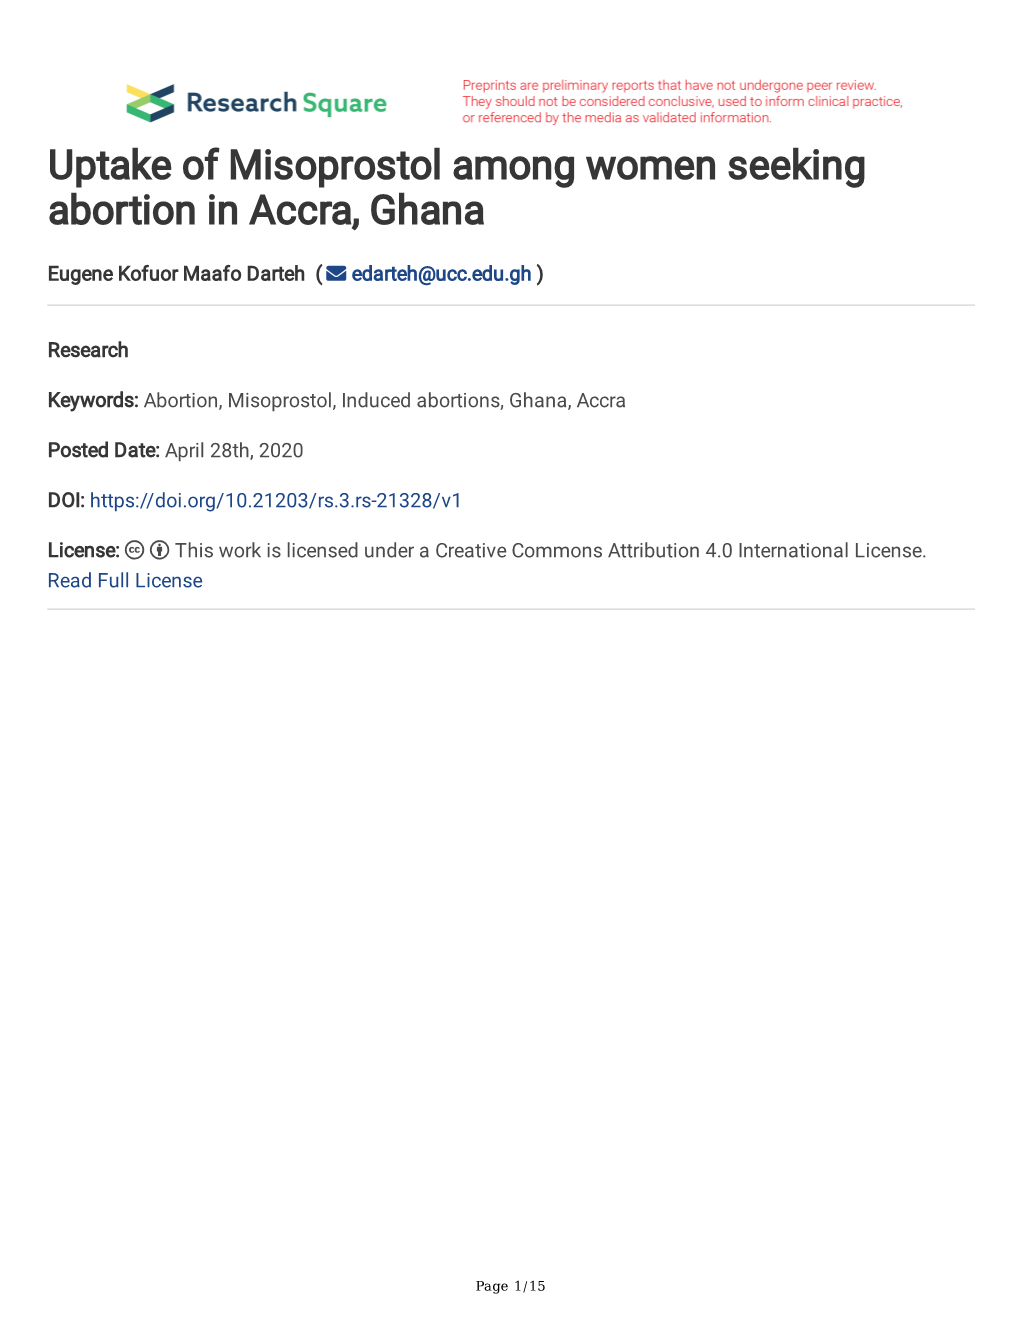 Uptake of Misoprostol Among Women Seeking Abortion in Accra, Ghana